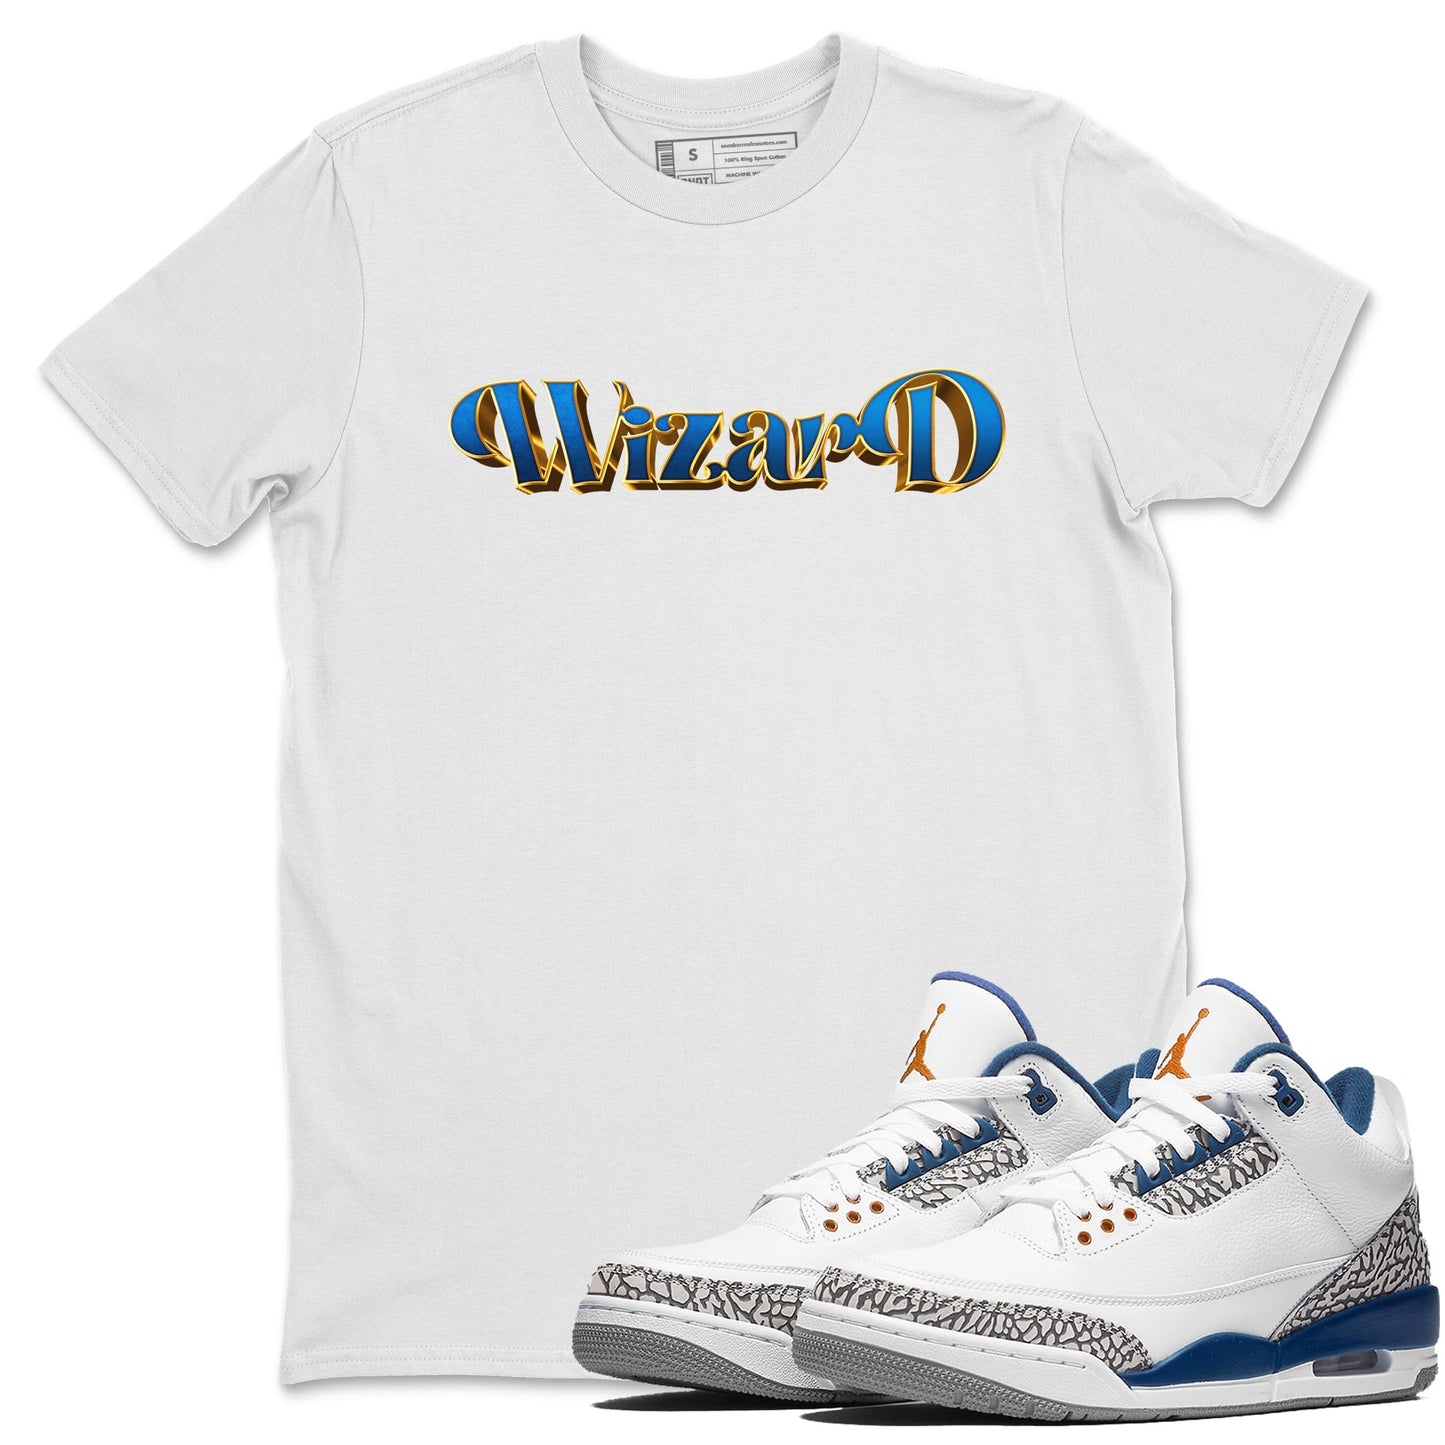 Air Jordan 3 Wizards Sneaker Match Tees Antique Typo Sneaker Tees AJ3 Wizards Drip Gear Zone Unisex Shirts White 1